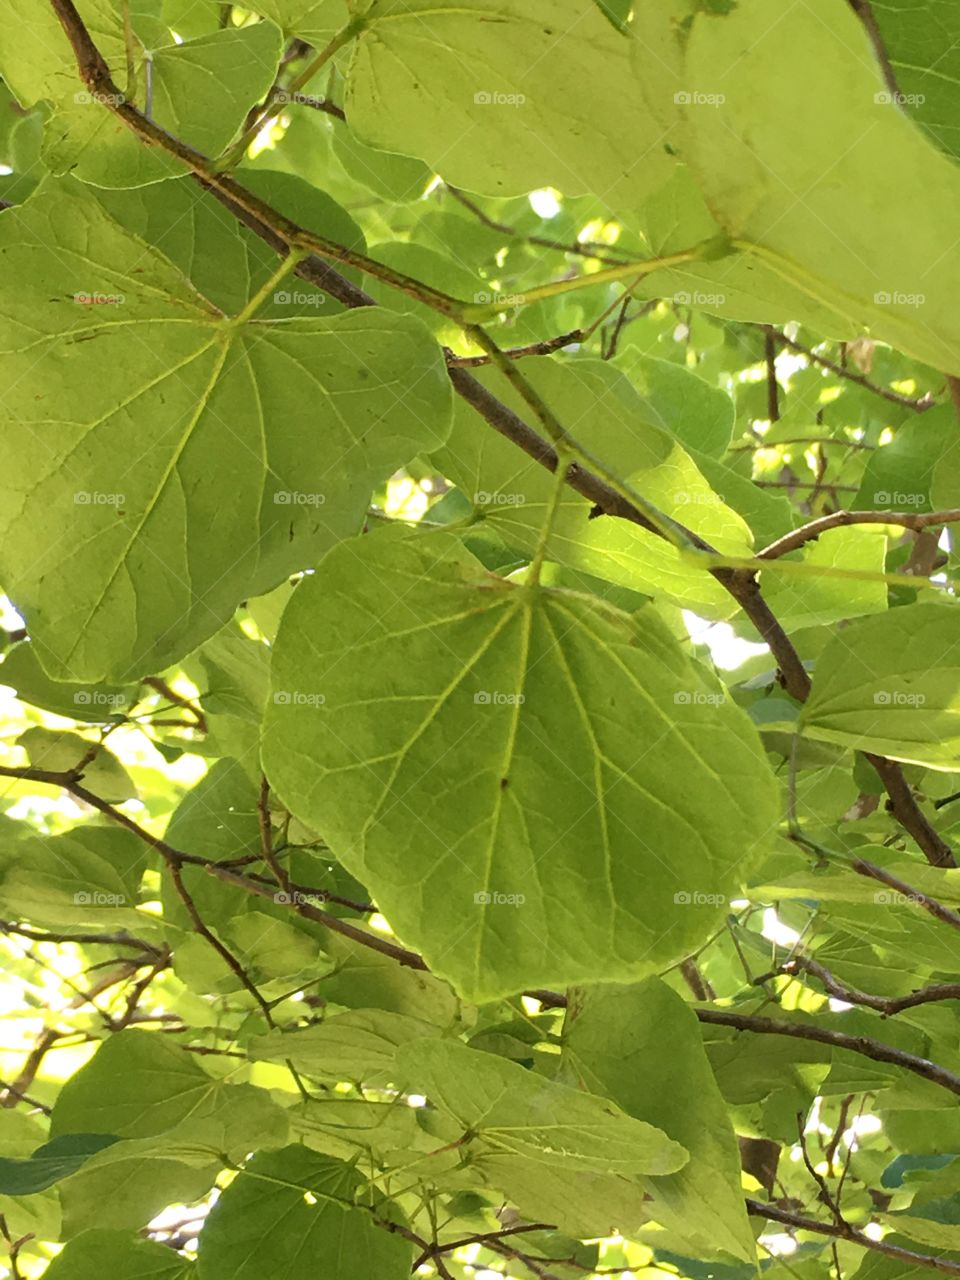 Under side of leaves 